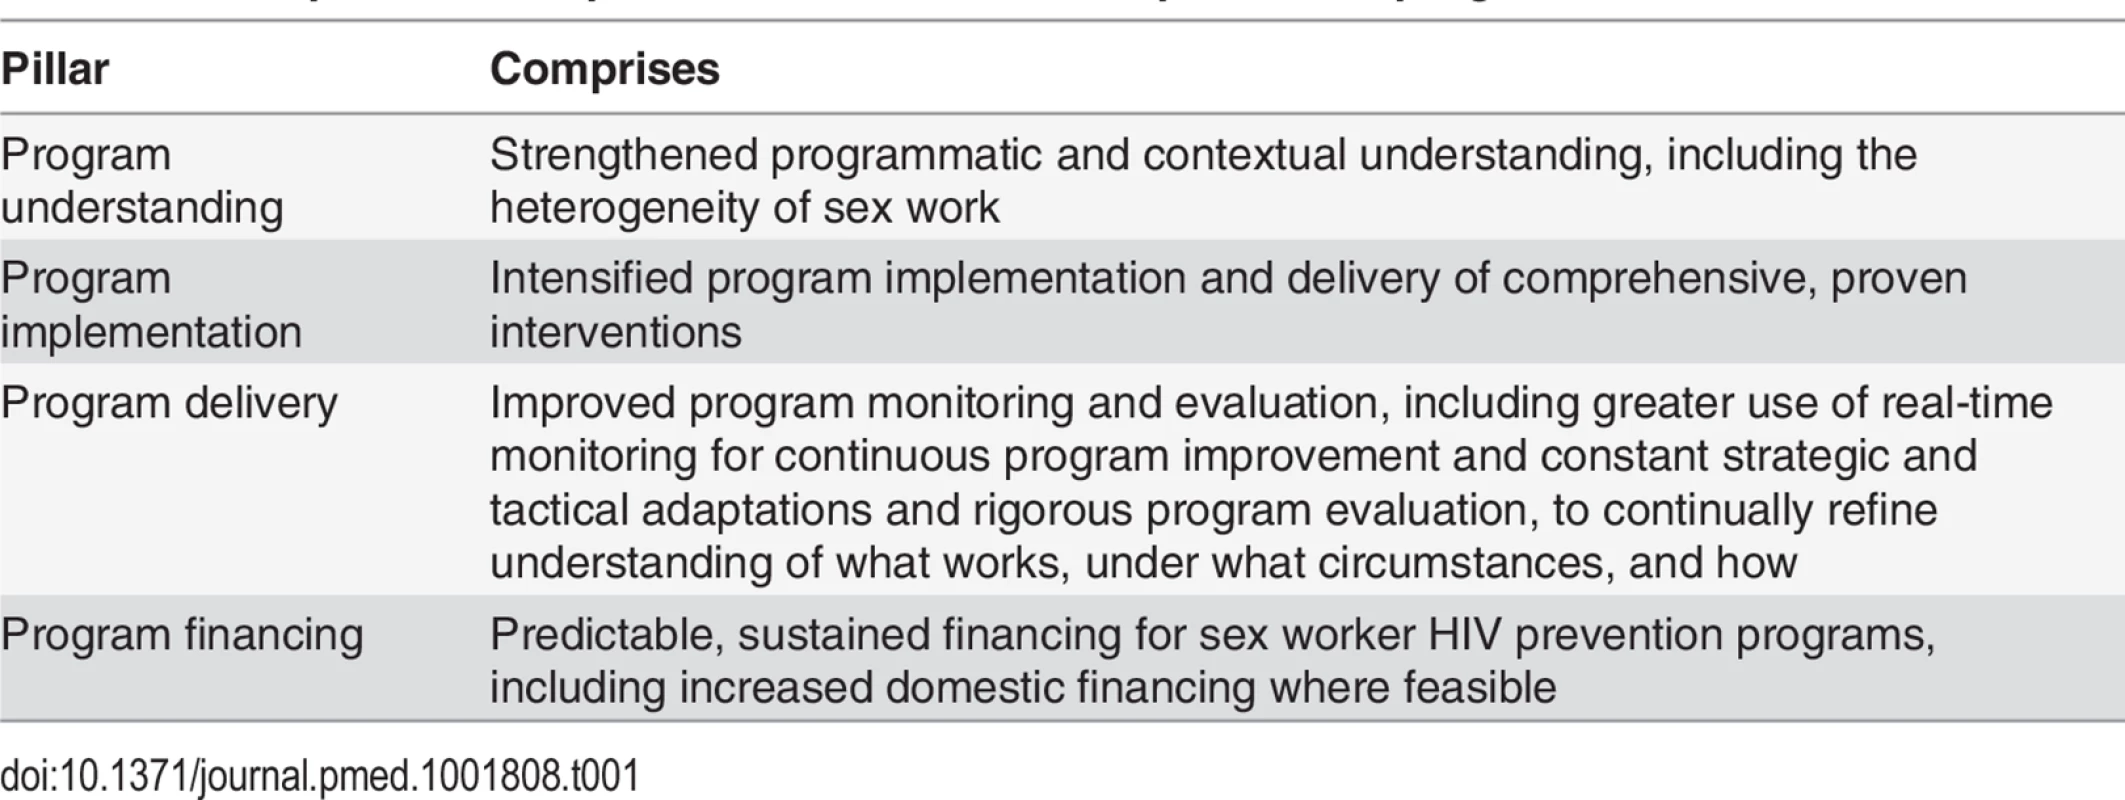 Principles of a comprehensive sex worker HIV prevention program.